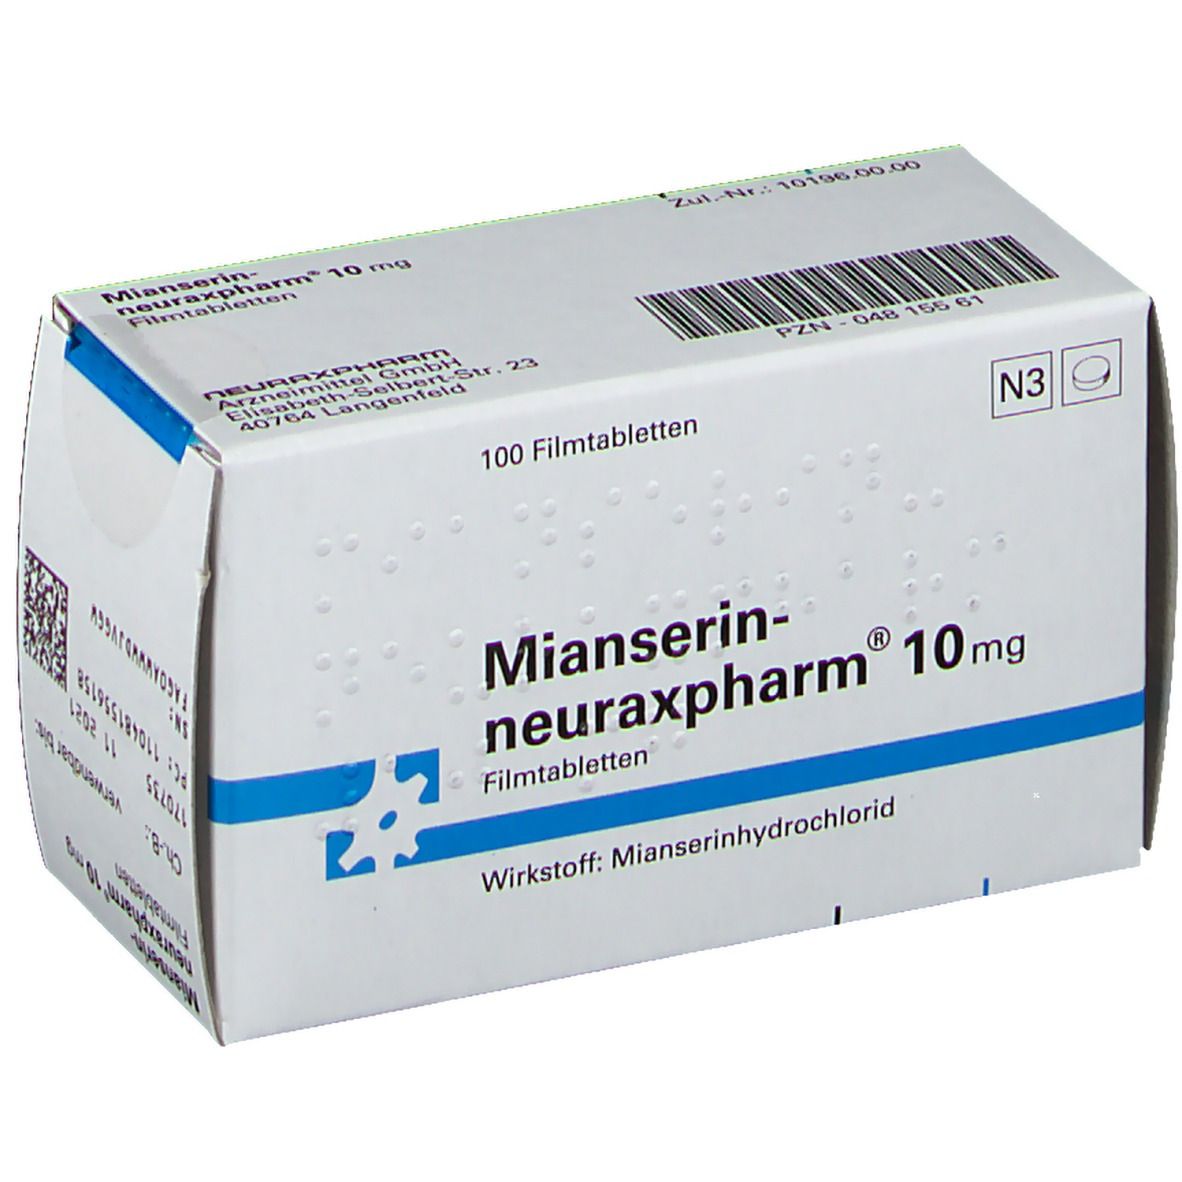 Mianserin-neuraxpharm® 10 mg